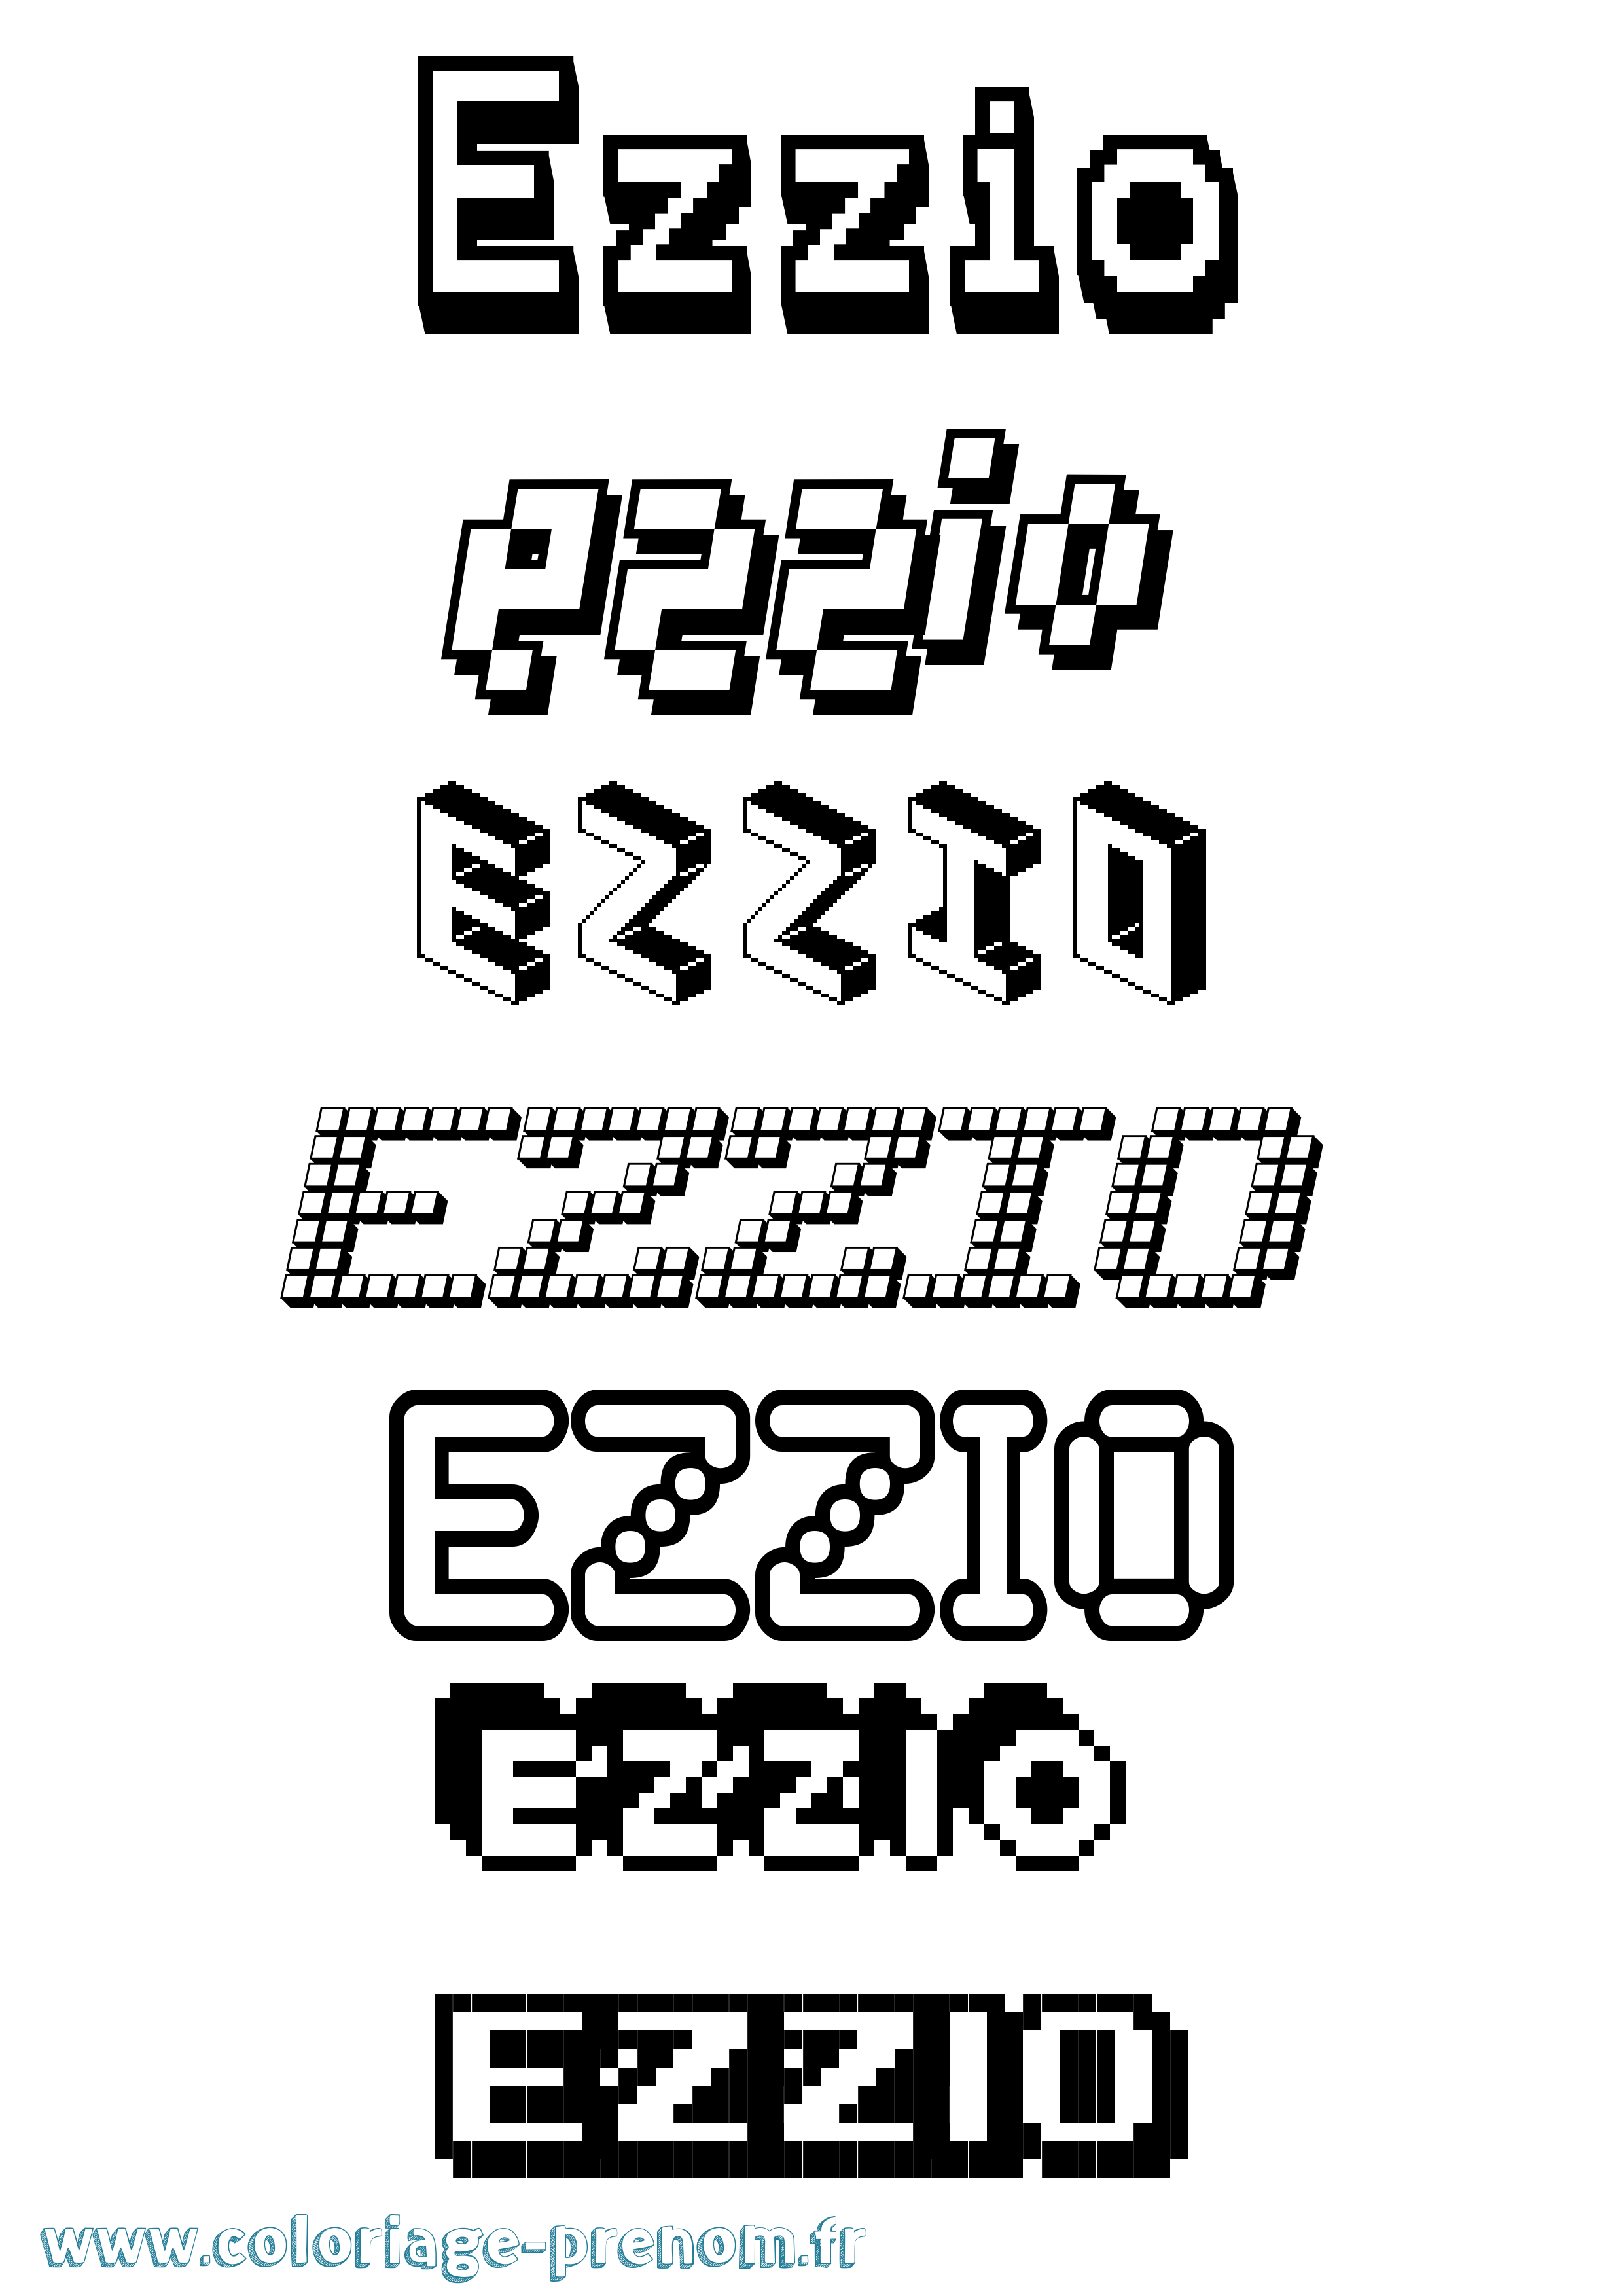 Coloriage prénom Ezzio Pixel